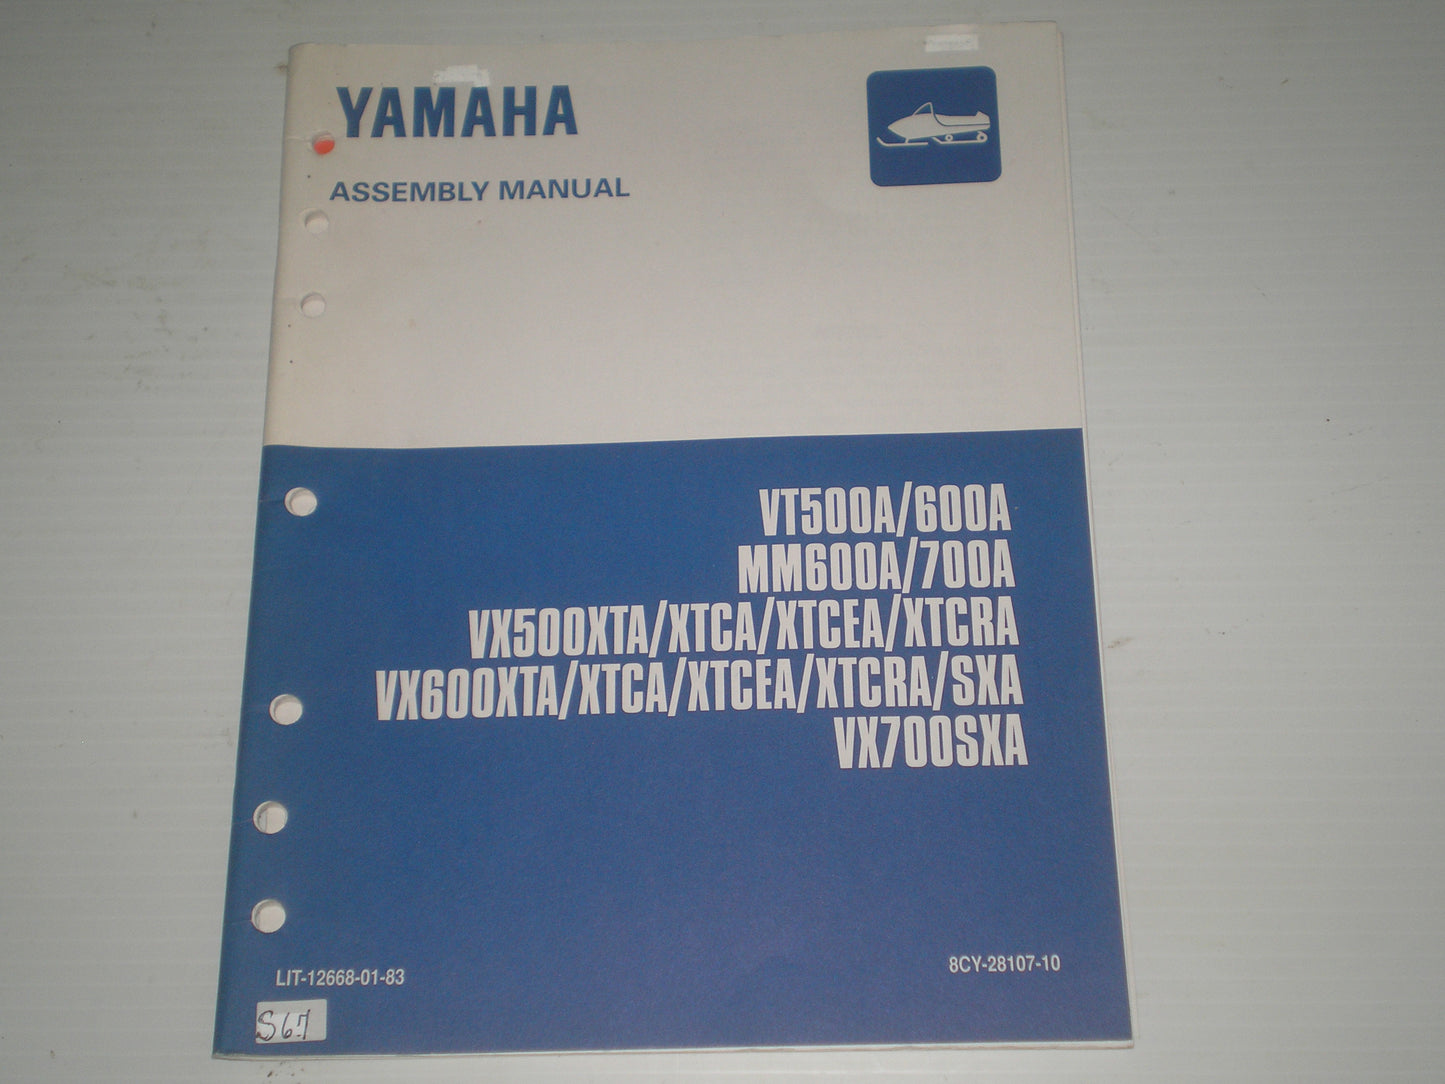 YAMAHA VT500 VT600 MM600 MM700 VX500 VX600 VX700 1997 Assembly Manual  8CY-28107-10  LIT-12668-01-83  #S67